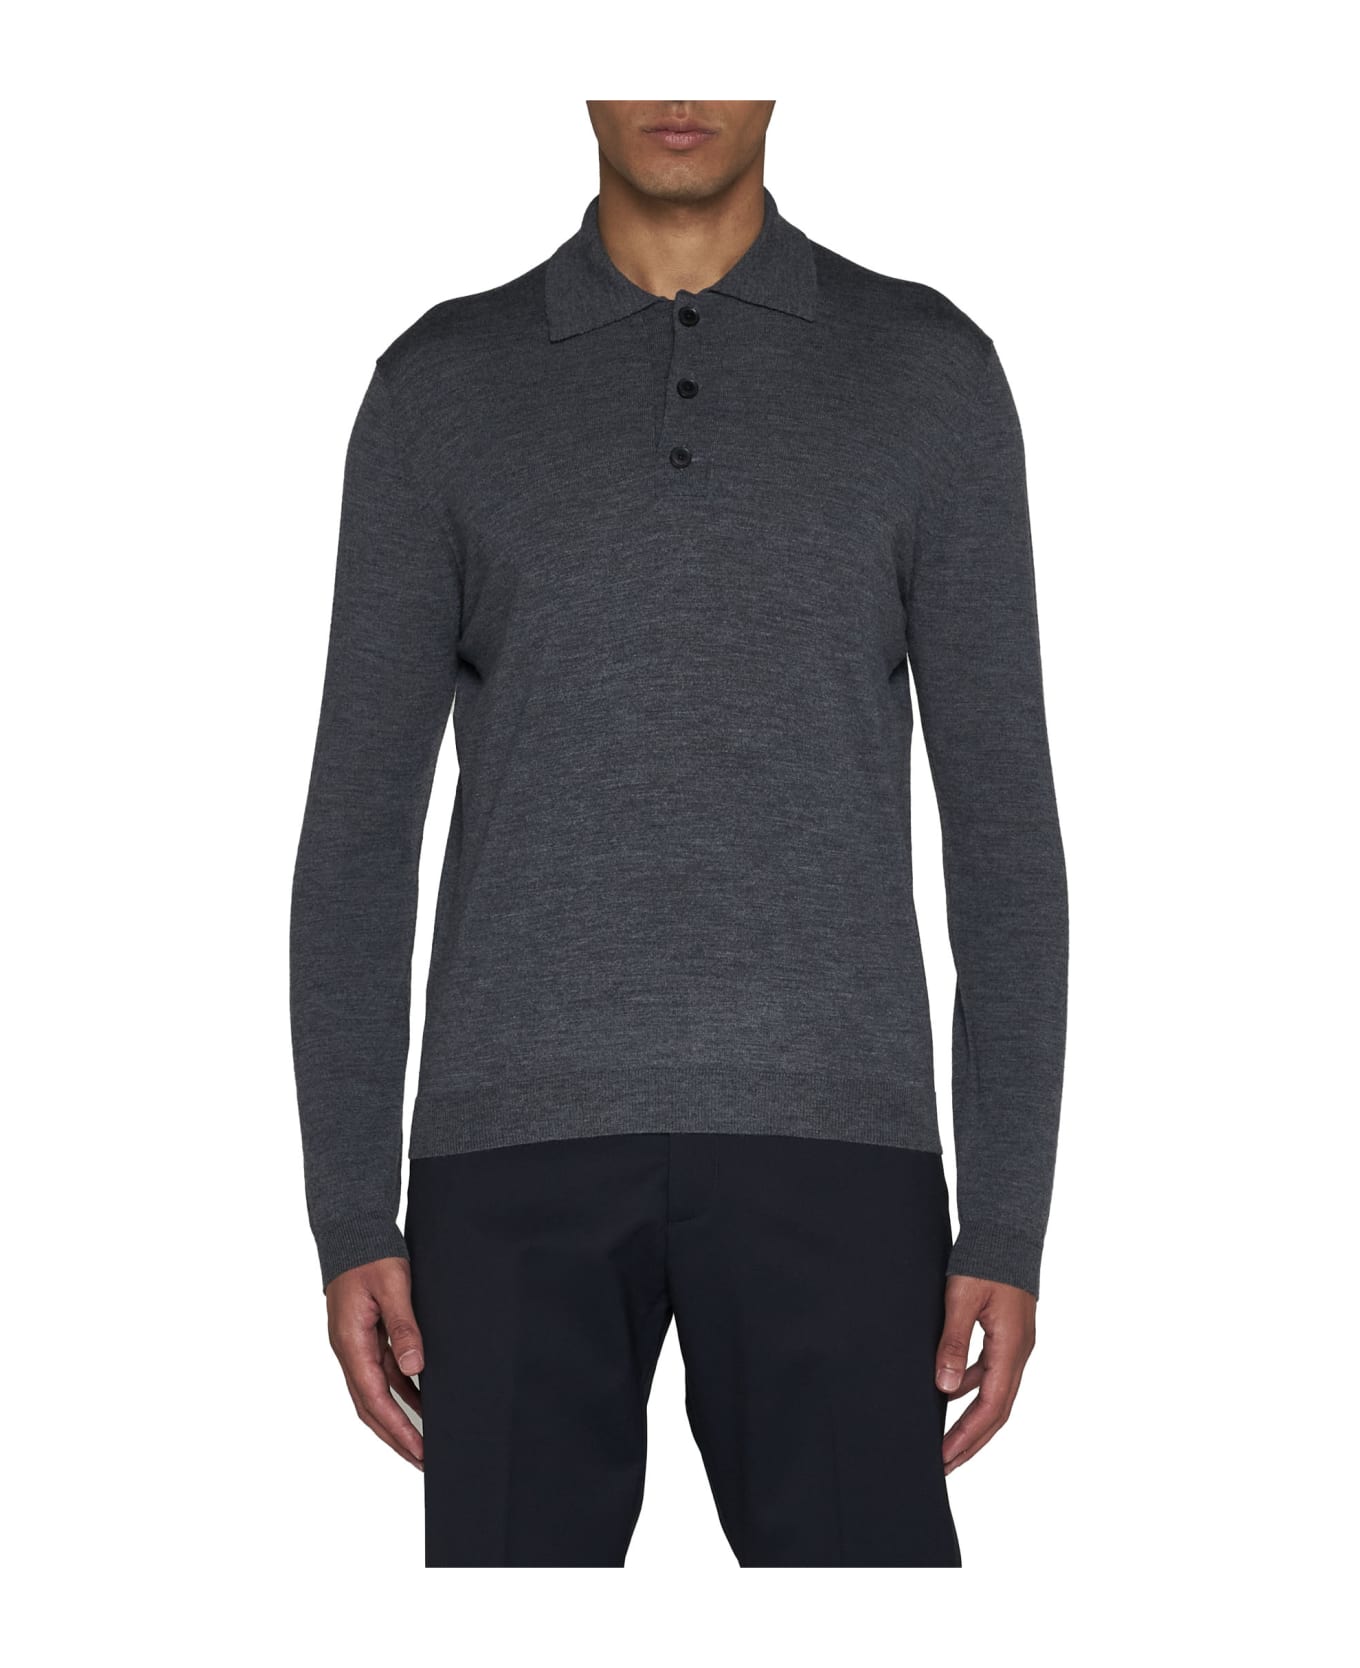 Low Brand Polo Shirt - Mid grey melange ポロシャツ